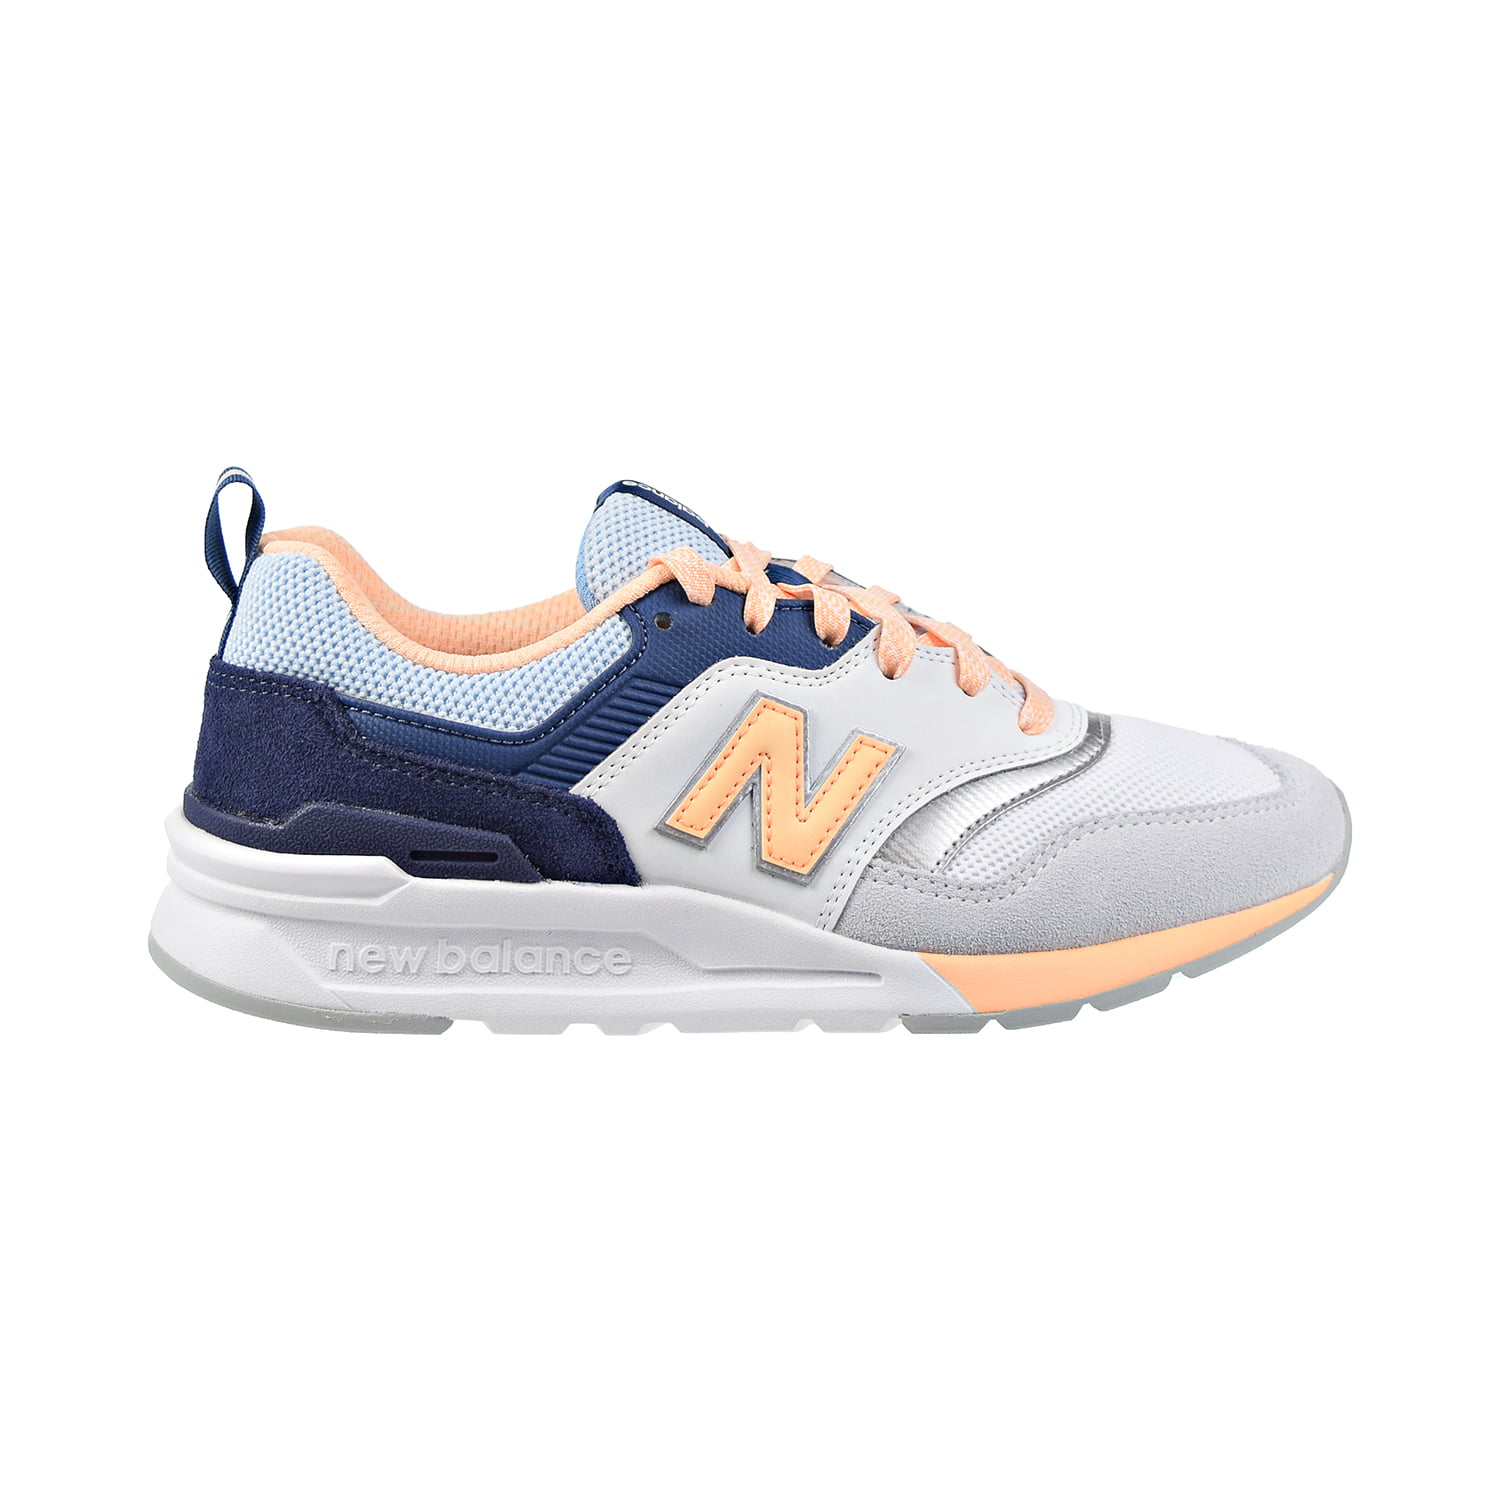 New Balance 997 Women's Shoes Grey/Light Orange/Navy cw997-hbb -